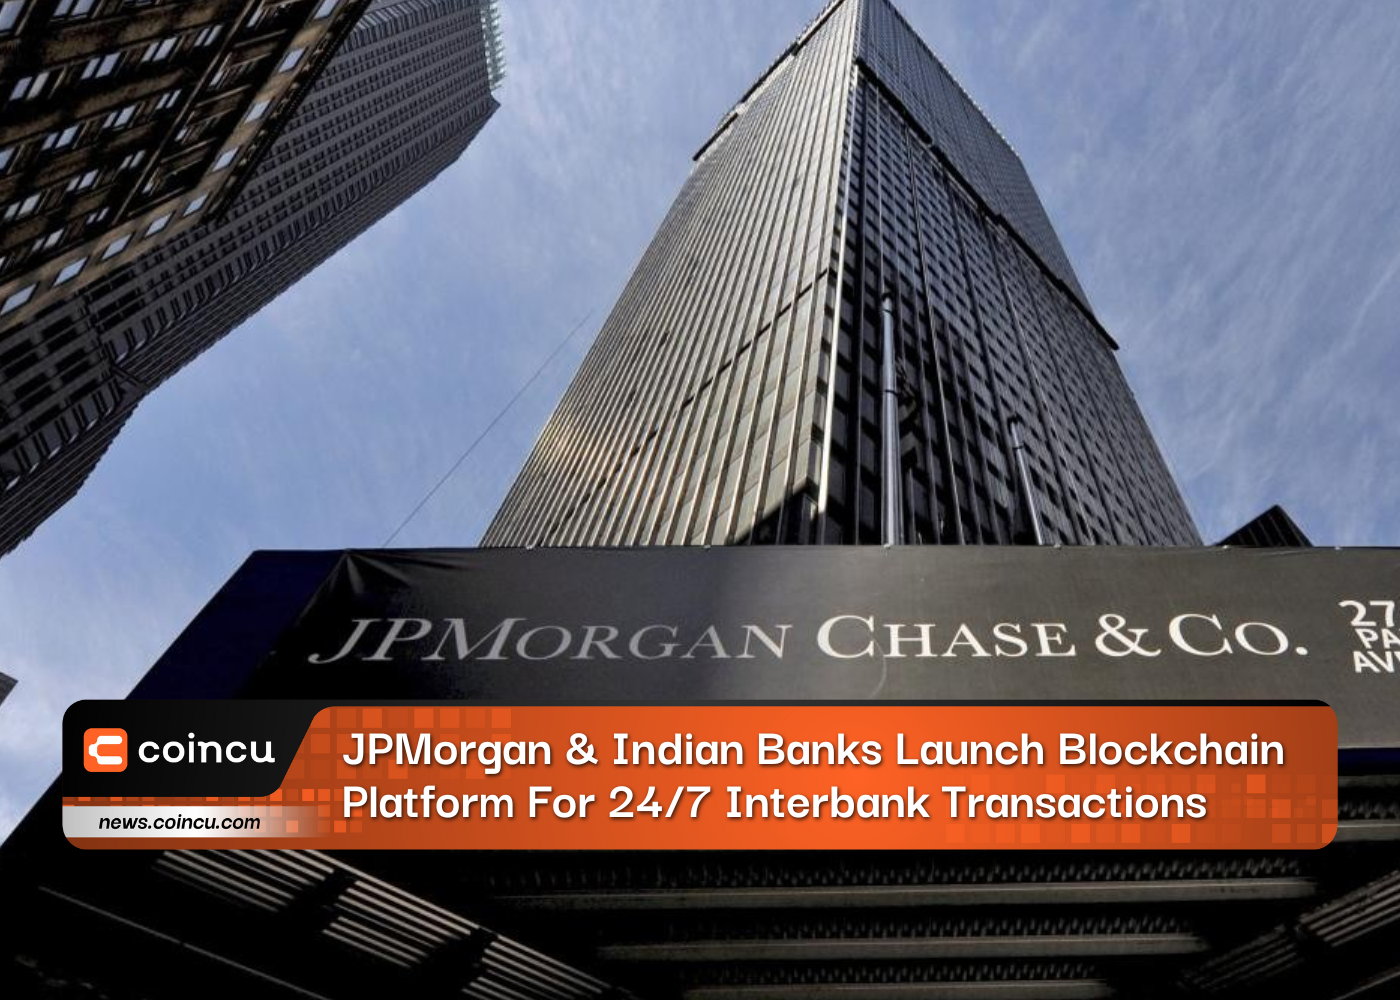 JPMorgan & Indian Banks Launch Blockchain Platform For 24/7 Interbank Transactions